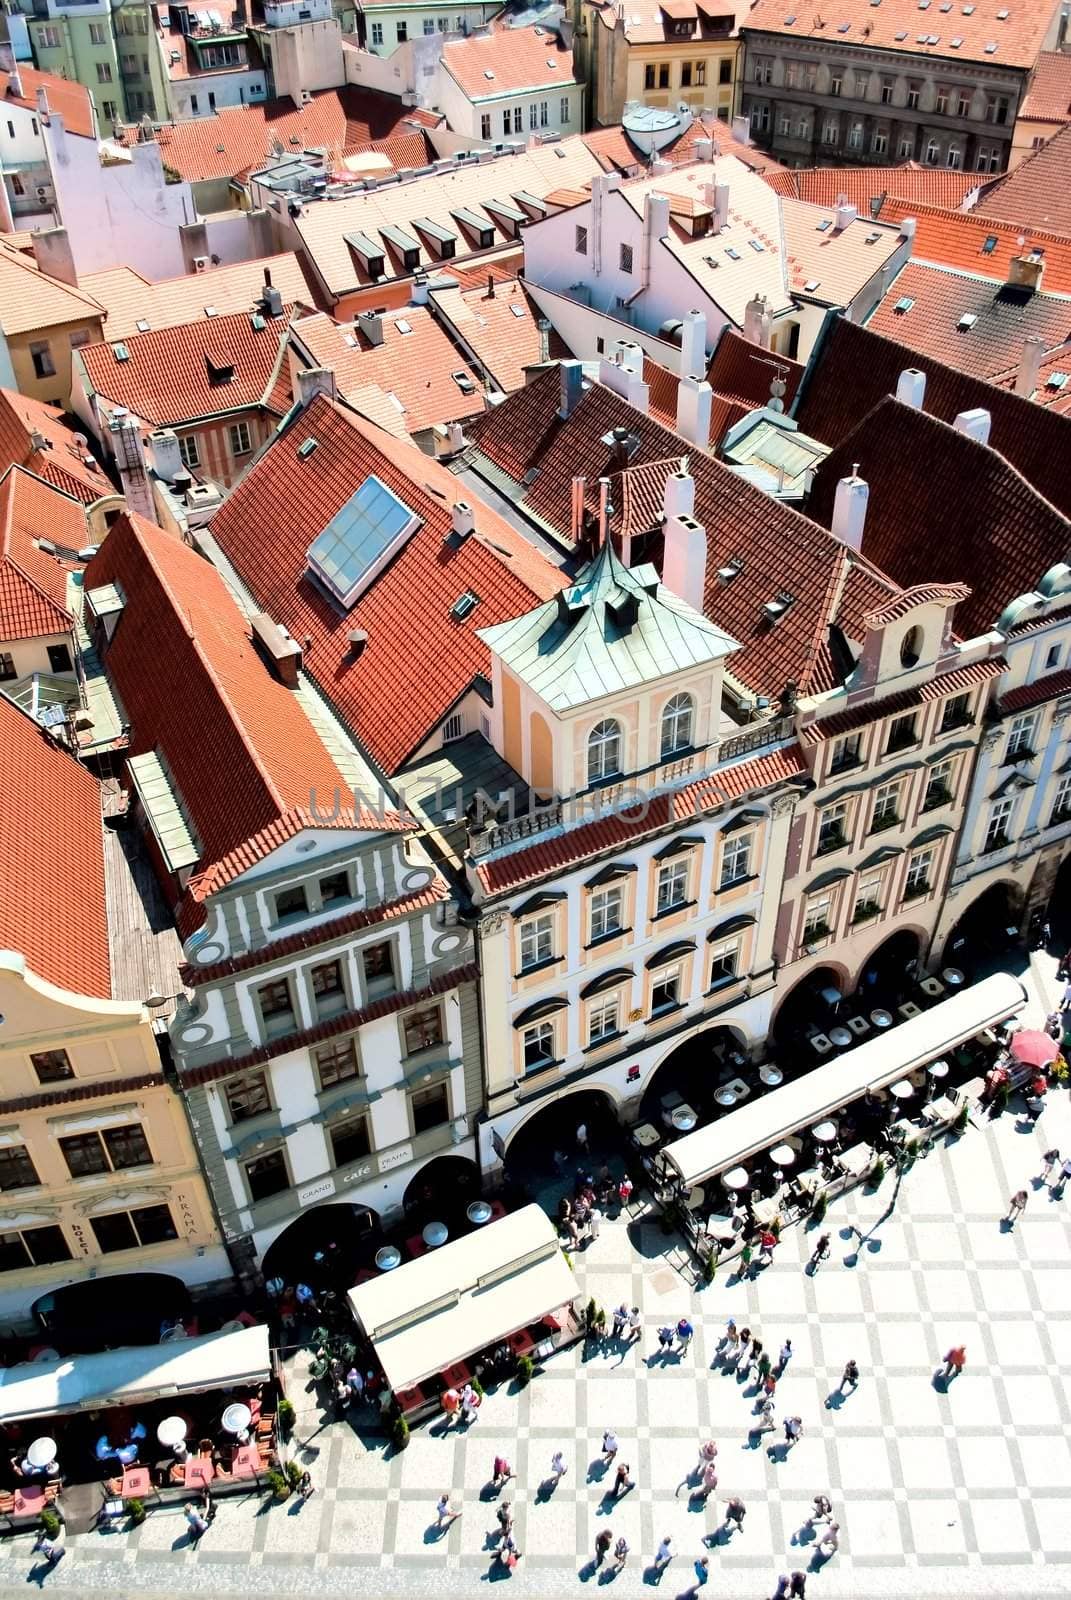 Praha square by andreyshedko